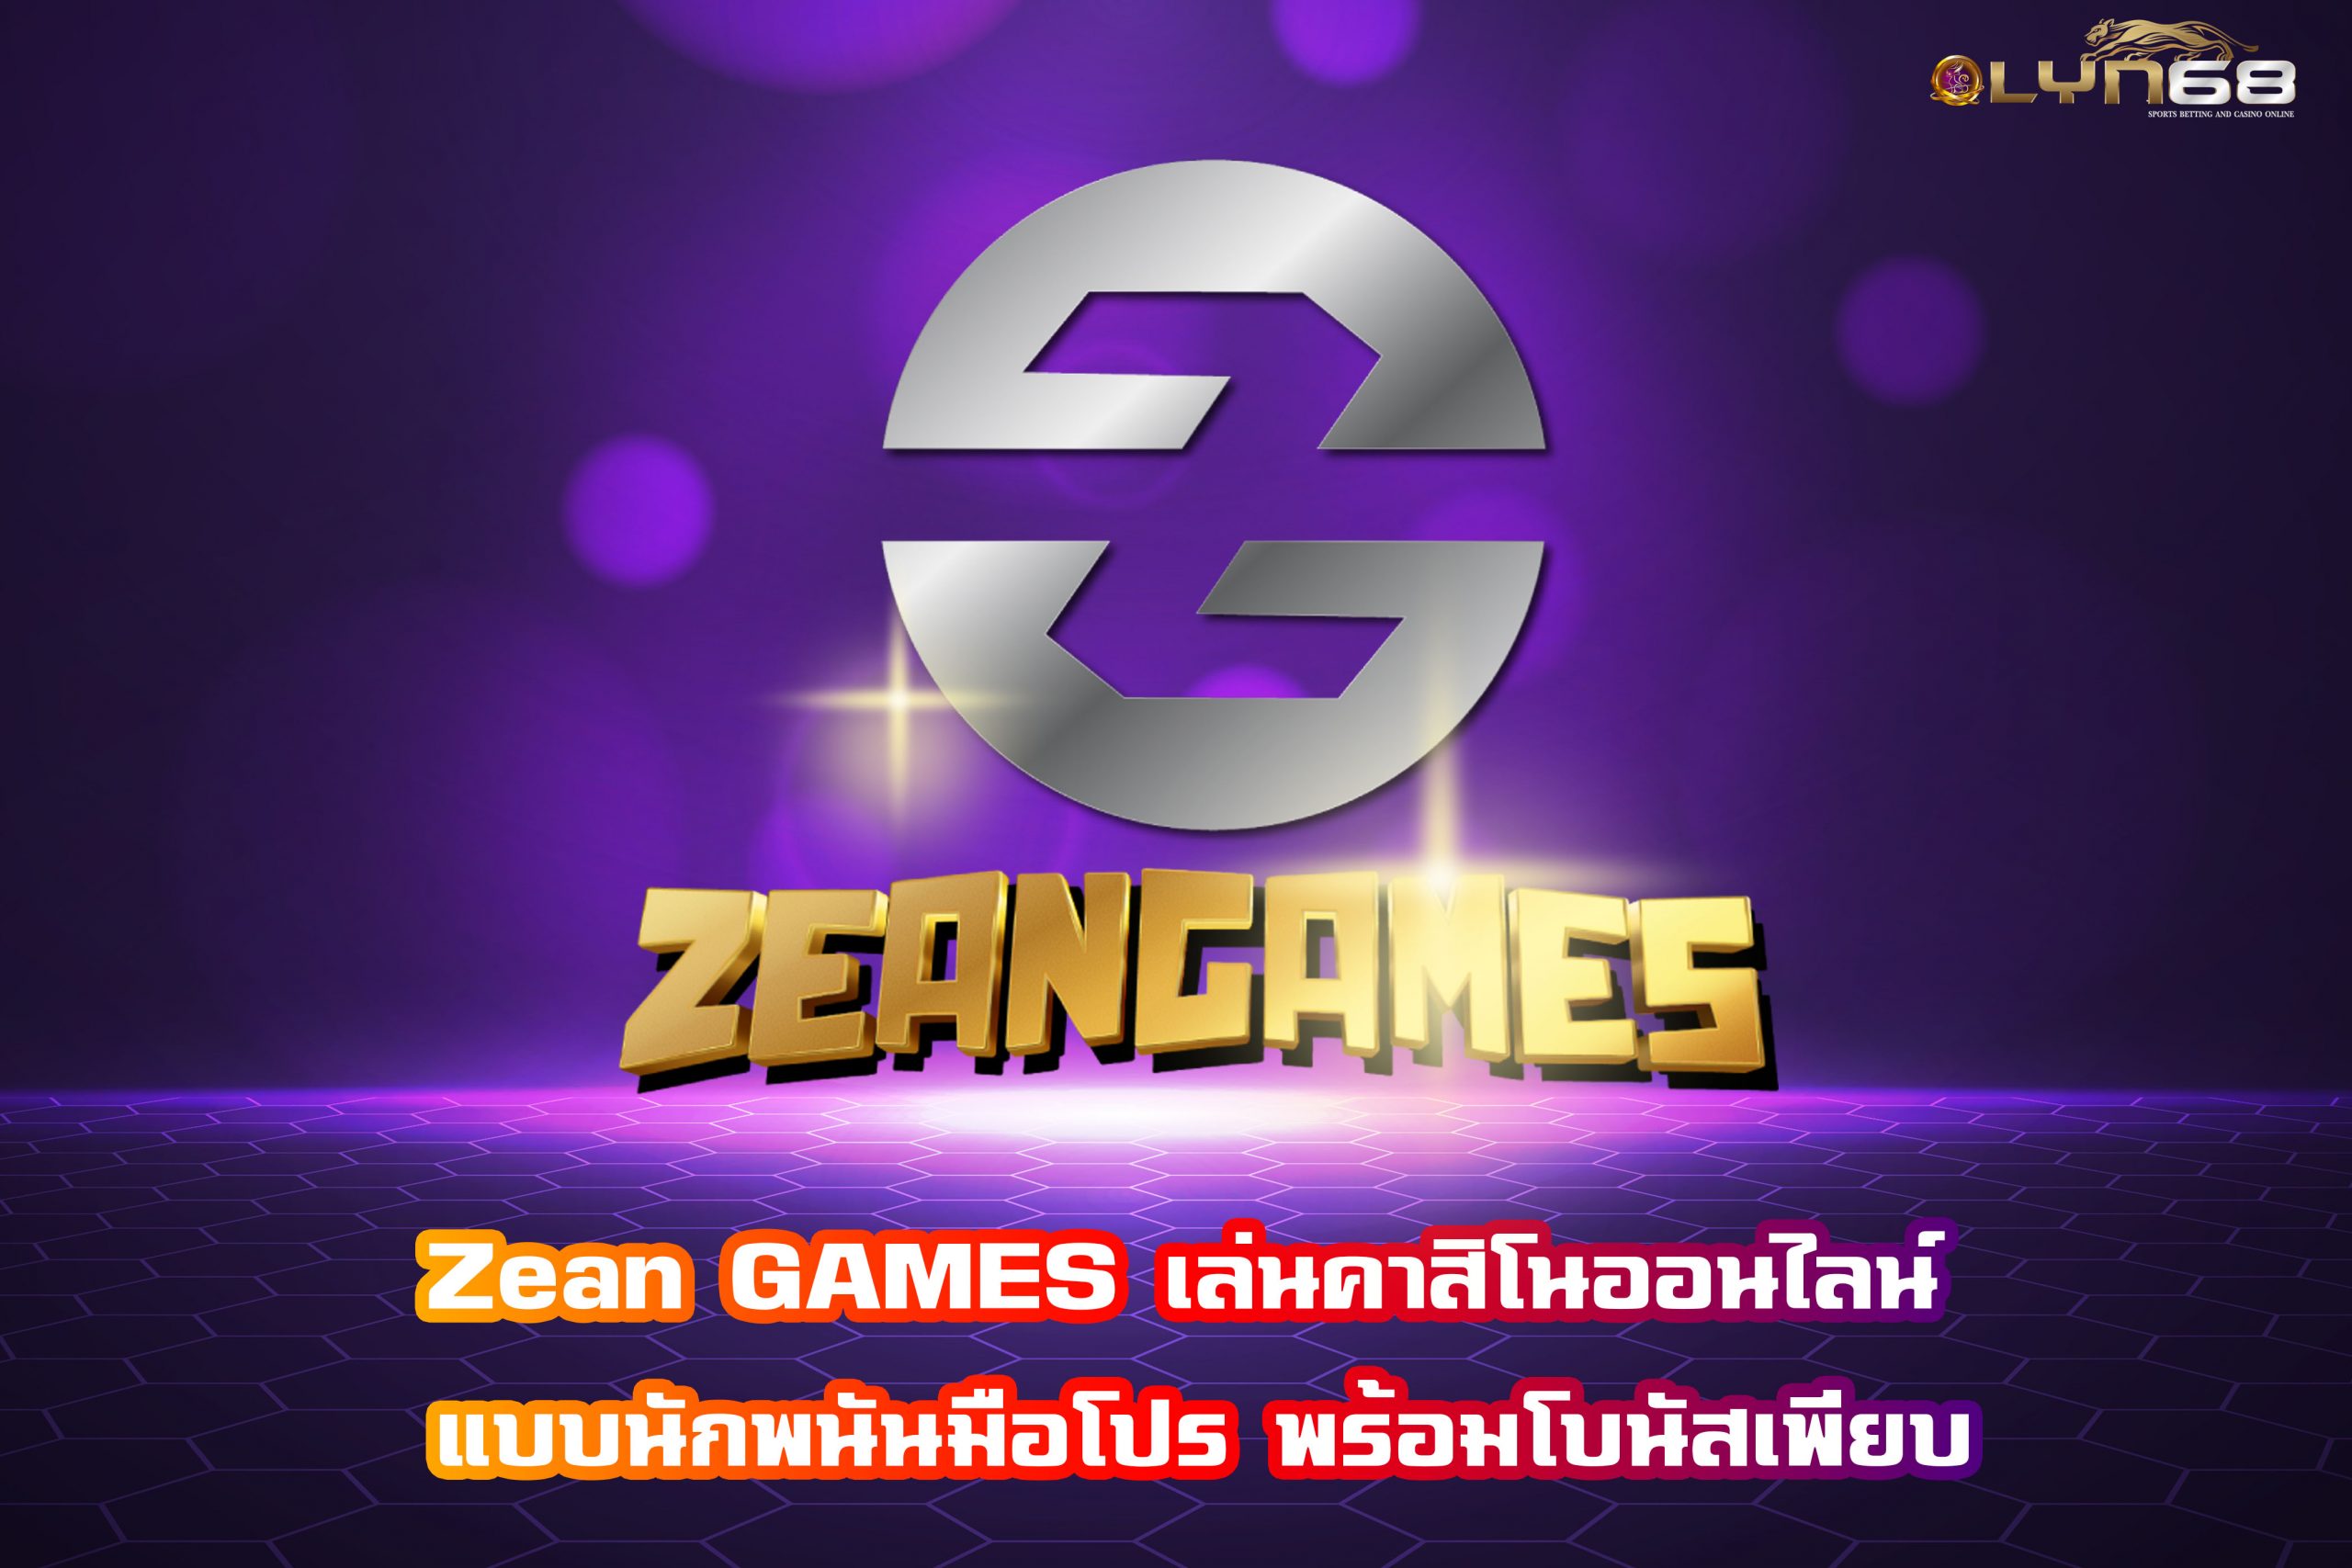 Zean GAMES เล่นคาสิโนออนไลน์ แบบนักพนันมือโปร พร้อมโบนัสเพียบ